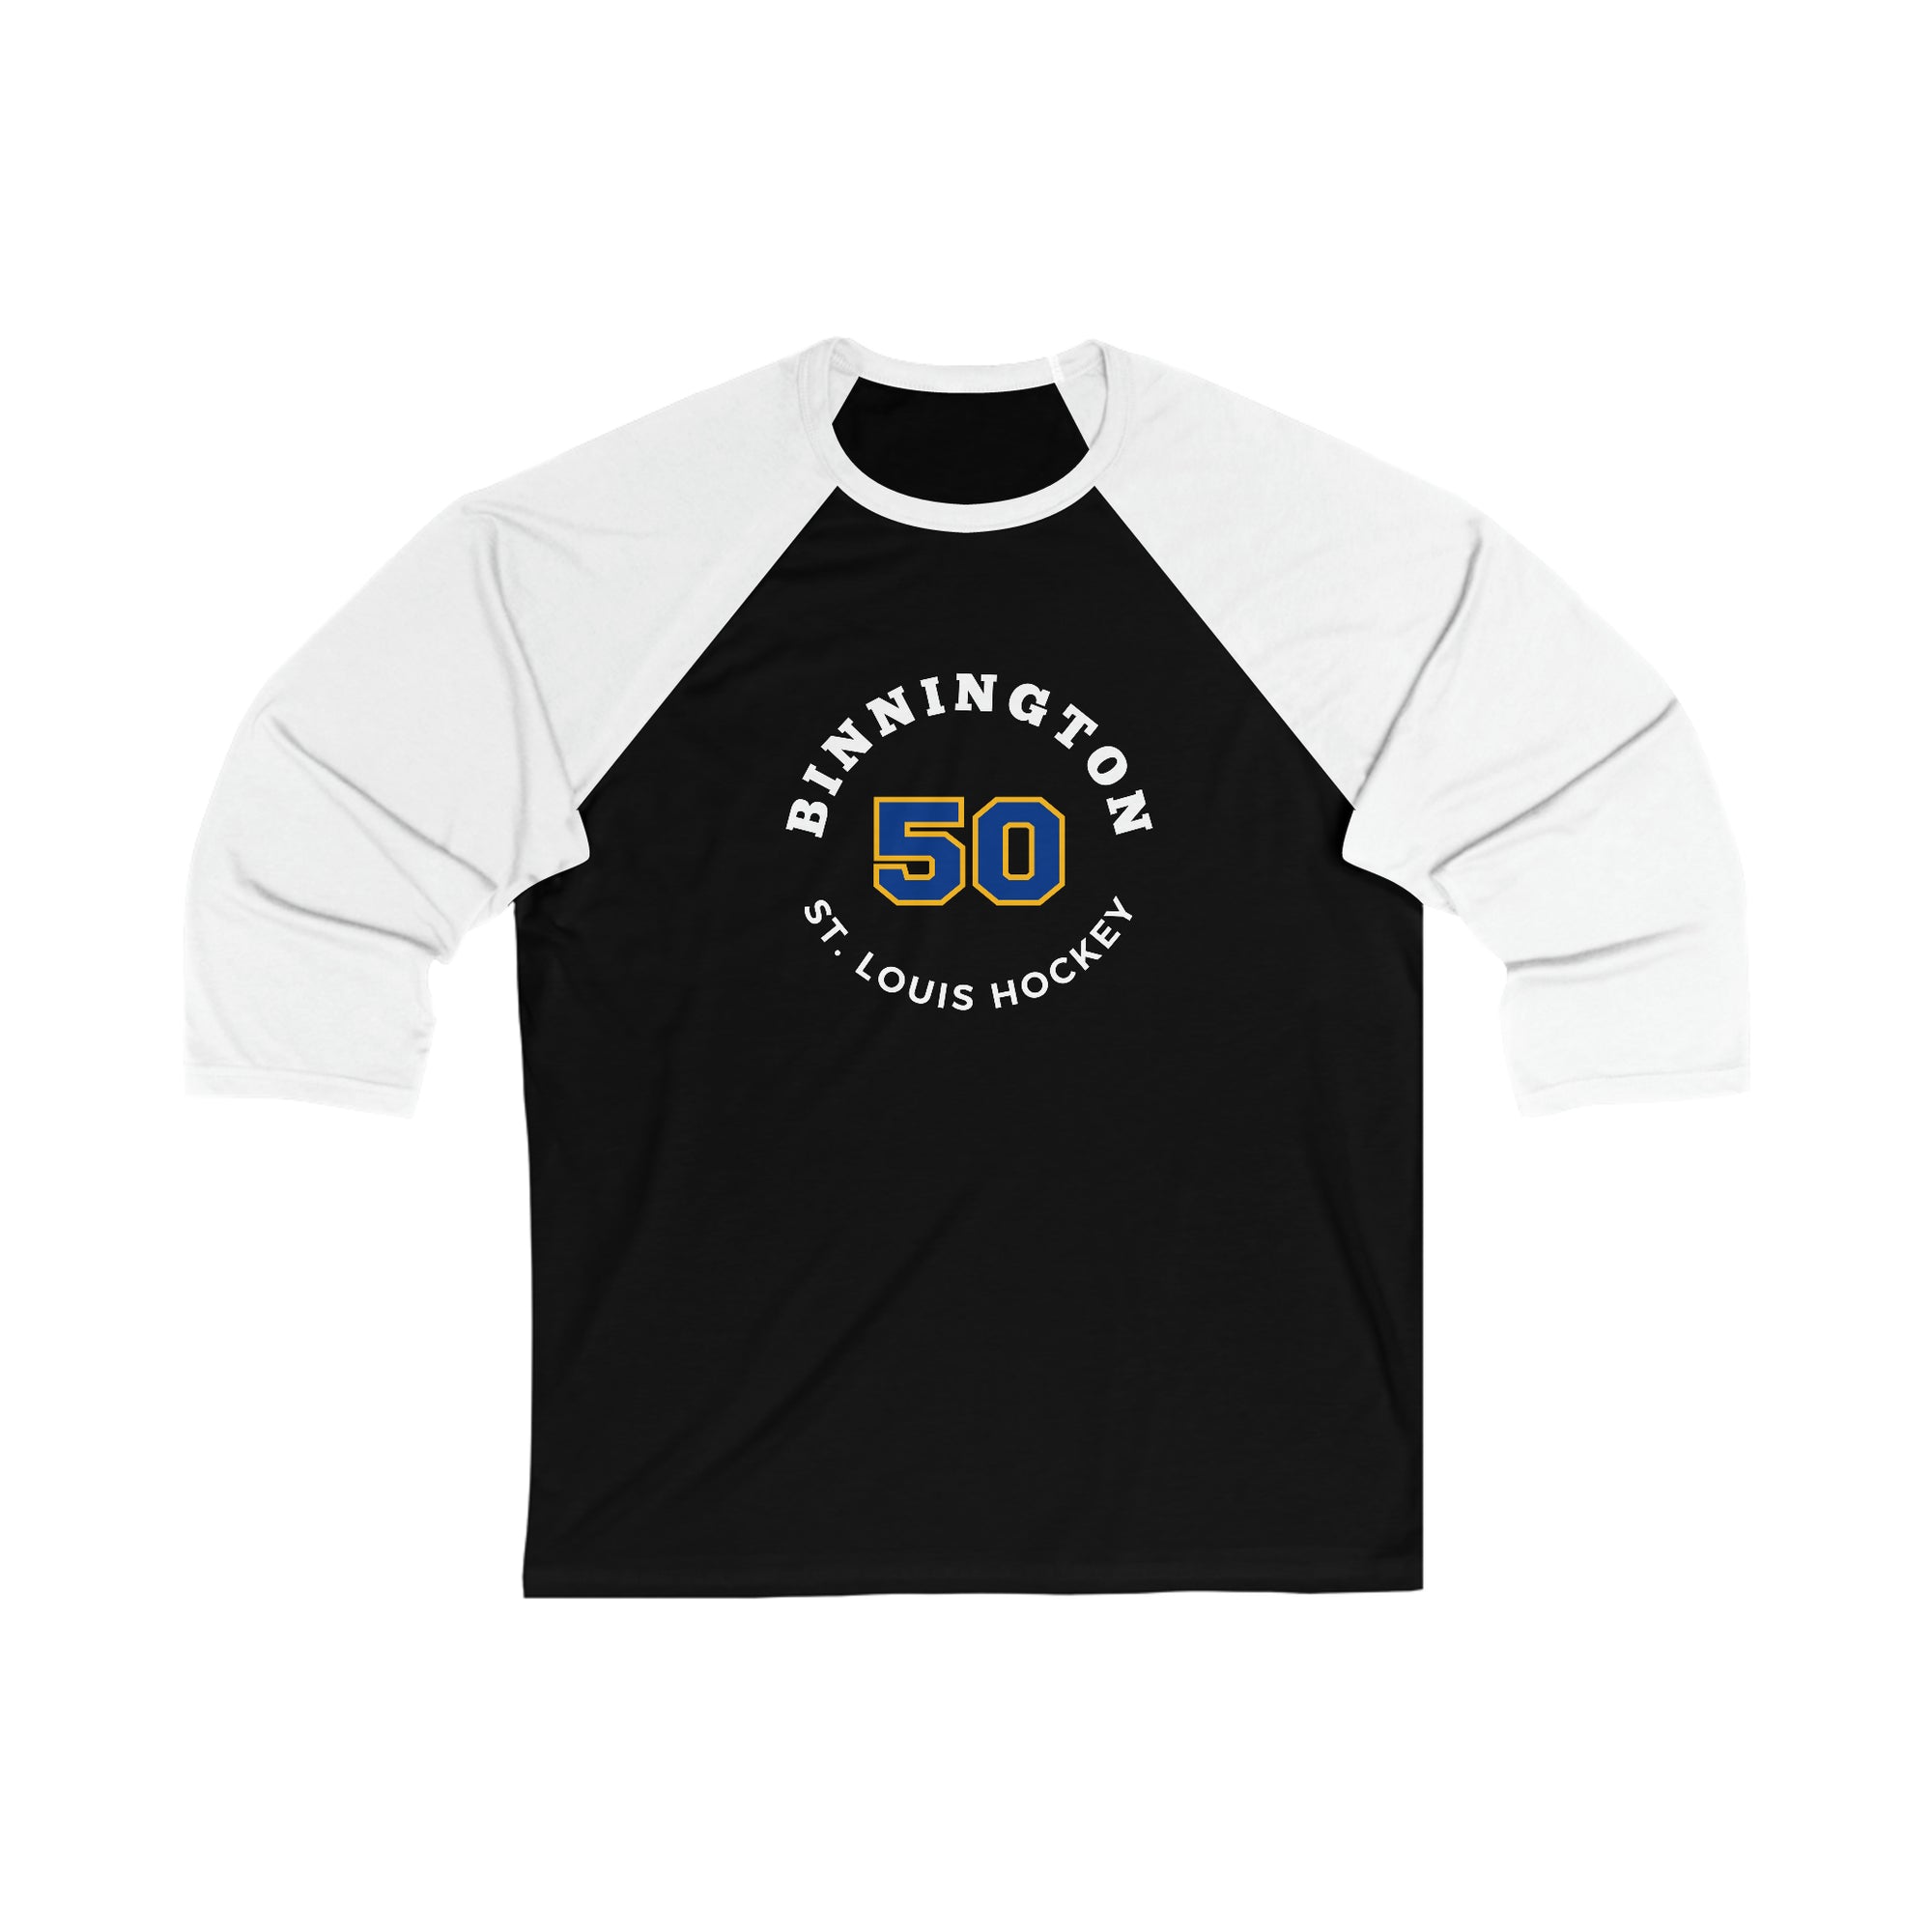 Binnington 50 St. Louis Hockey Number Arch Design Unisex Tri-Blend 3/4 Sleeve Raglan Baseball Shirt